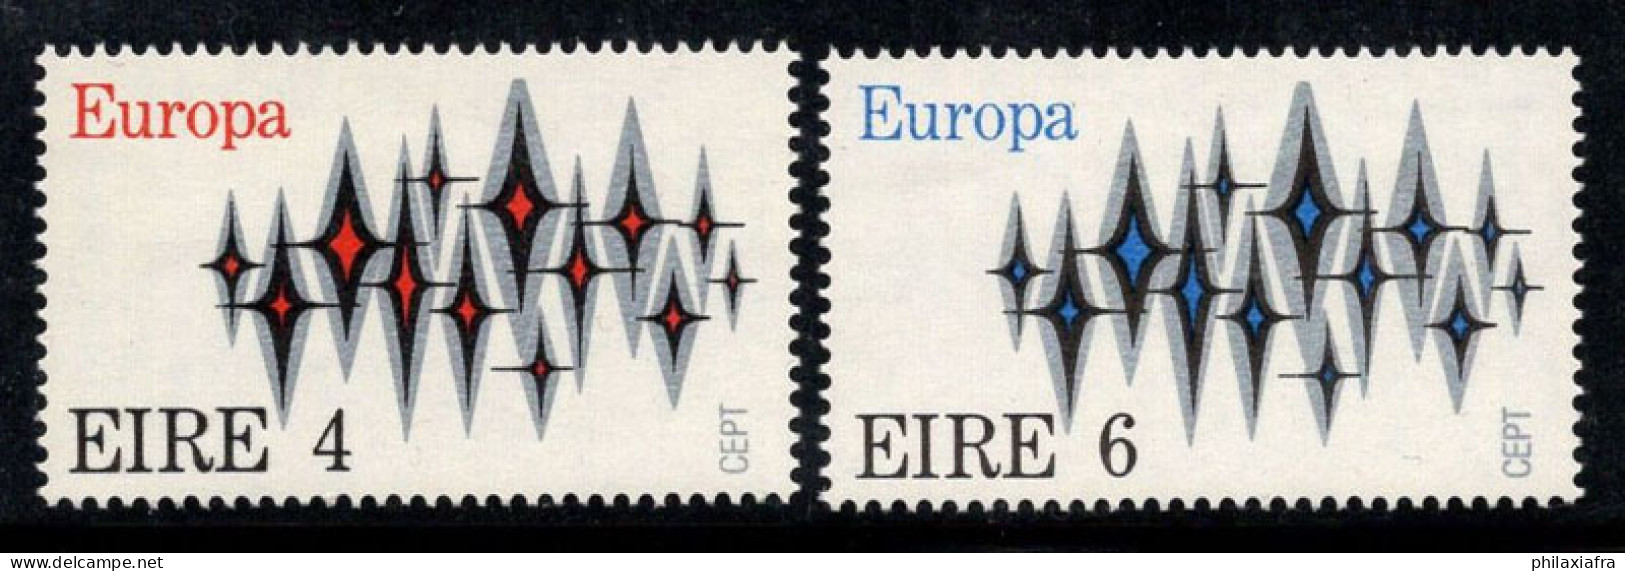 Irlande 1972 Mi. 276-277 Neuf ** 100% Europe CEPT, étoiles - Unused Stamps